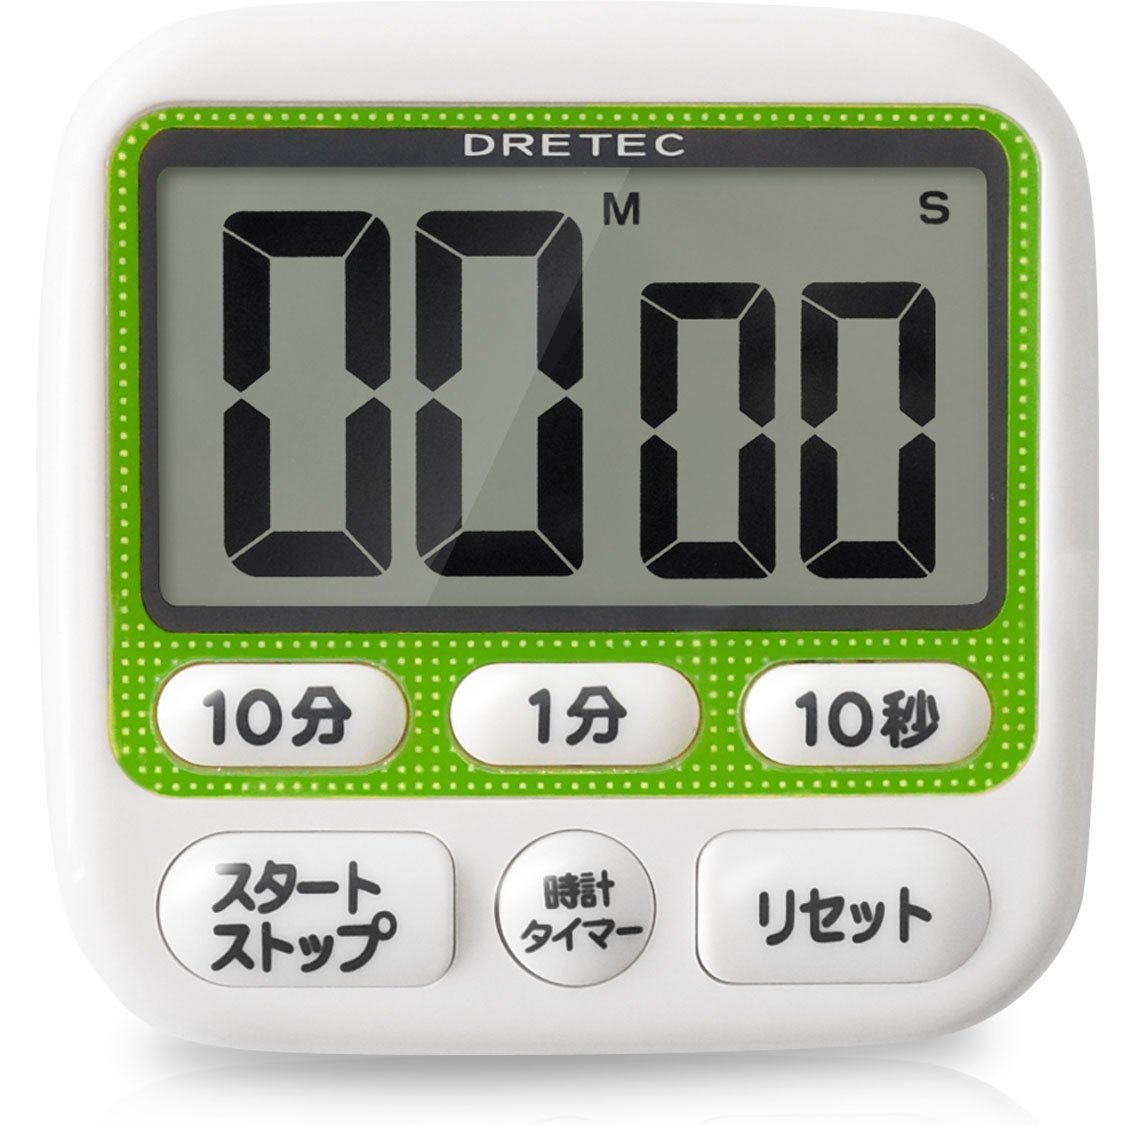 DRETEC (ドリテック) 時計付き大画面タイマー グリーン T -140GN /キッチンタイマー/大画面タイマー/デジタル/最大99分50秒 /料理/時計/